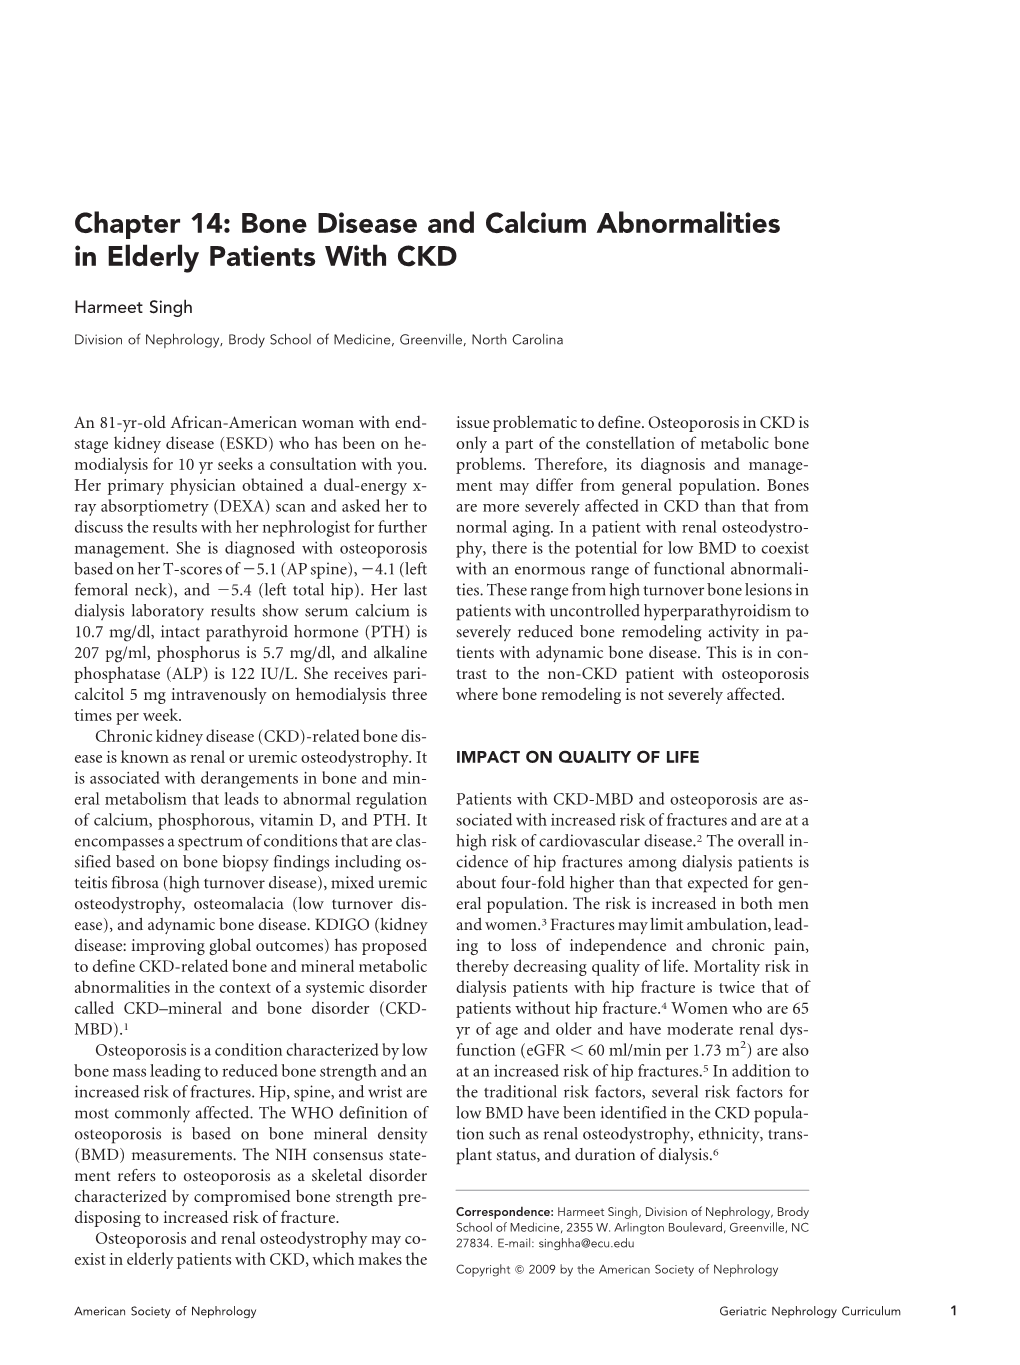 Bone Disease and Calcium Abnormalities in Elderly Patients with CKD